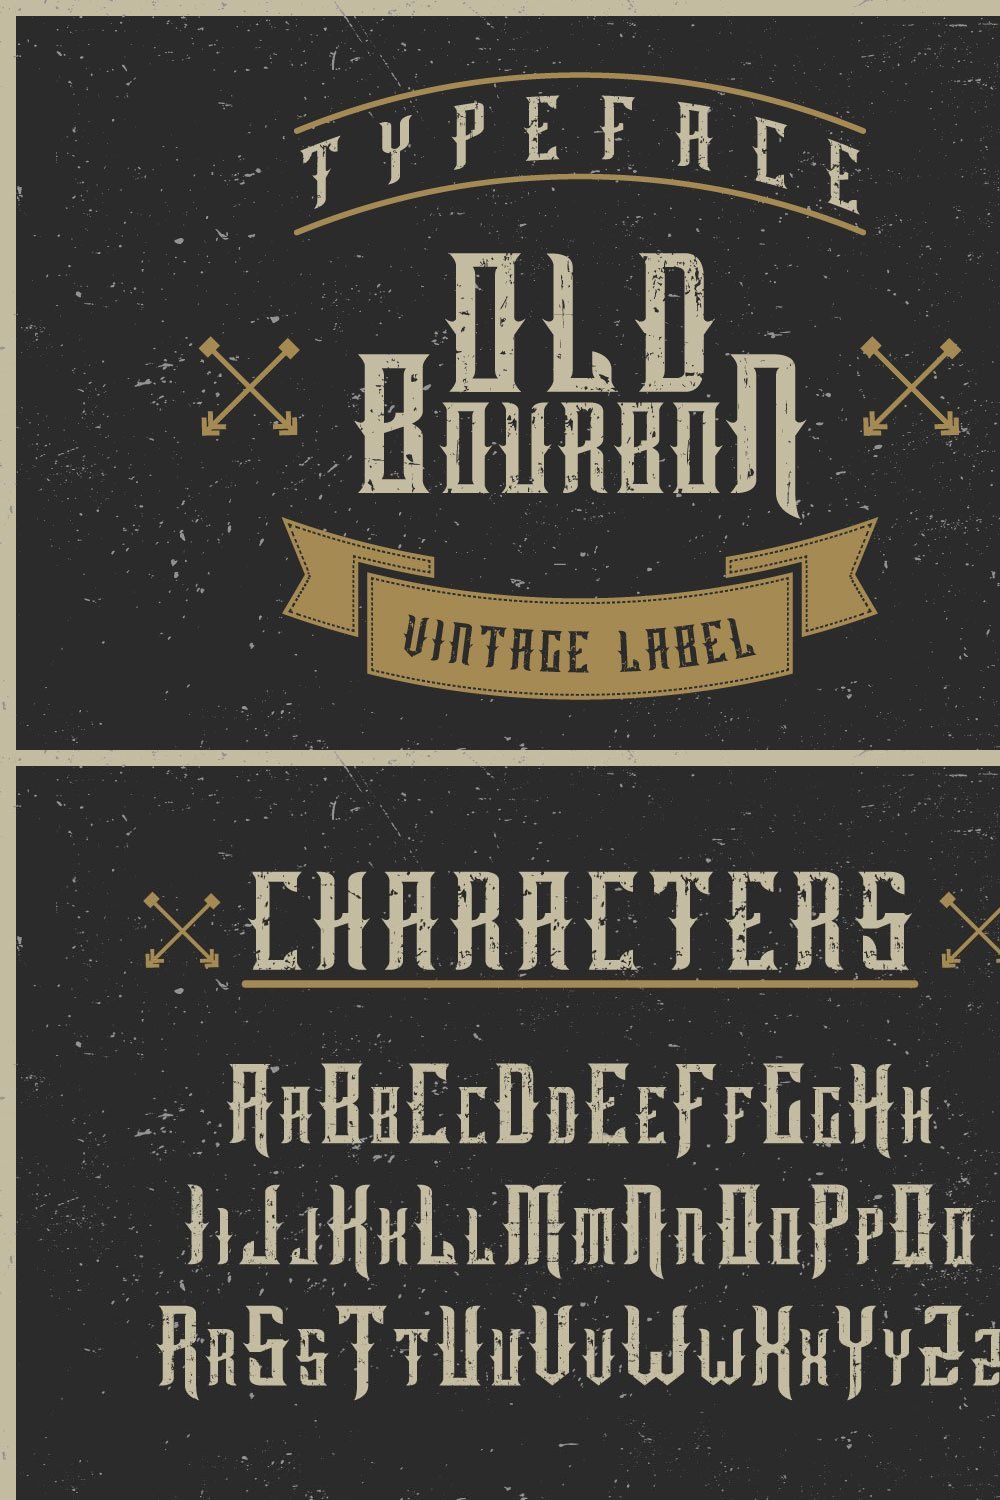 Old Bourbon label font pinterest preview image.